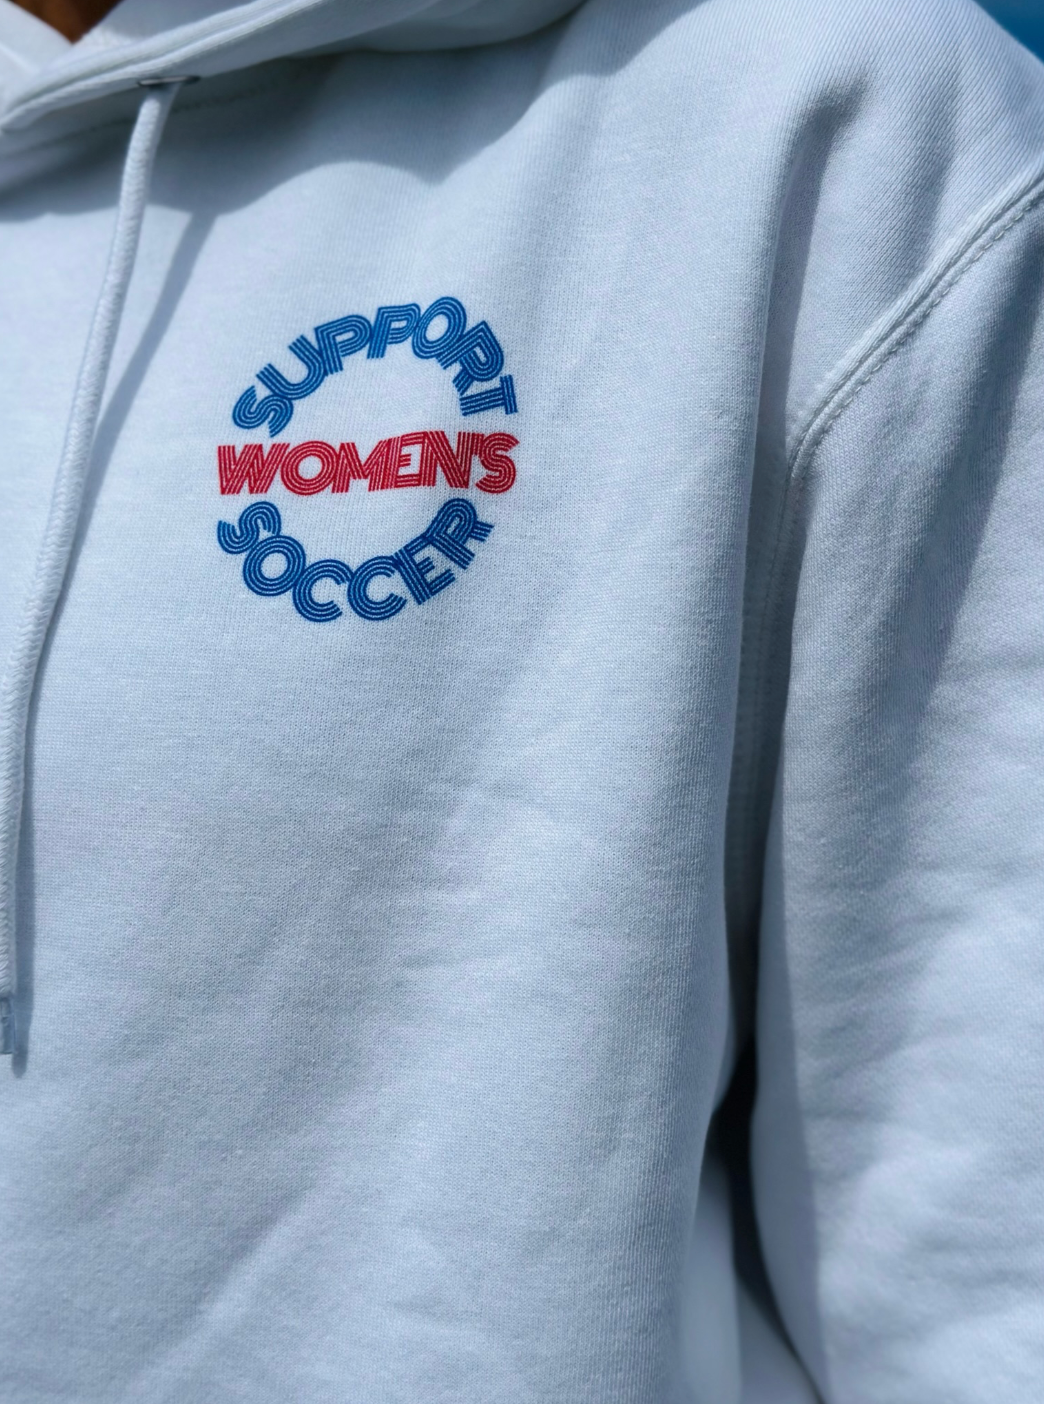 Support Women's Soccer Adult Hooded Sweatshirt